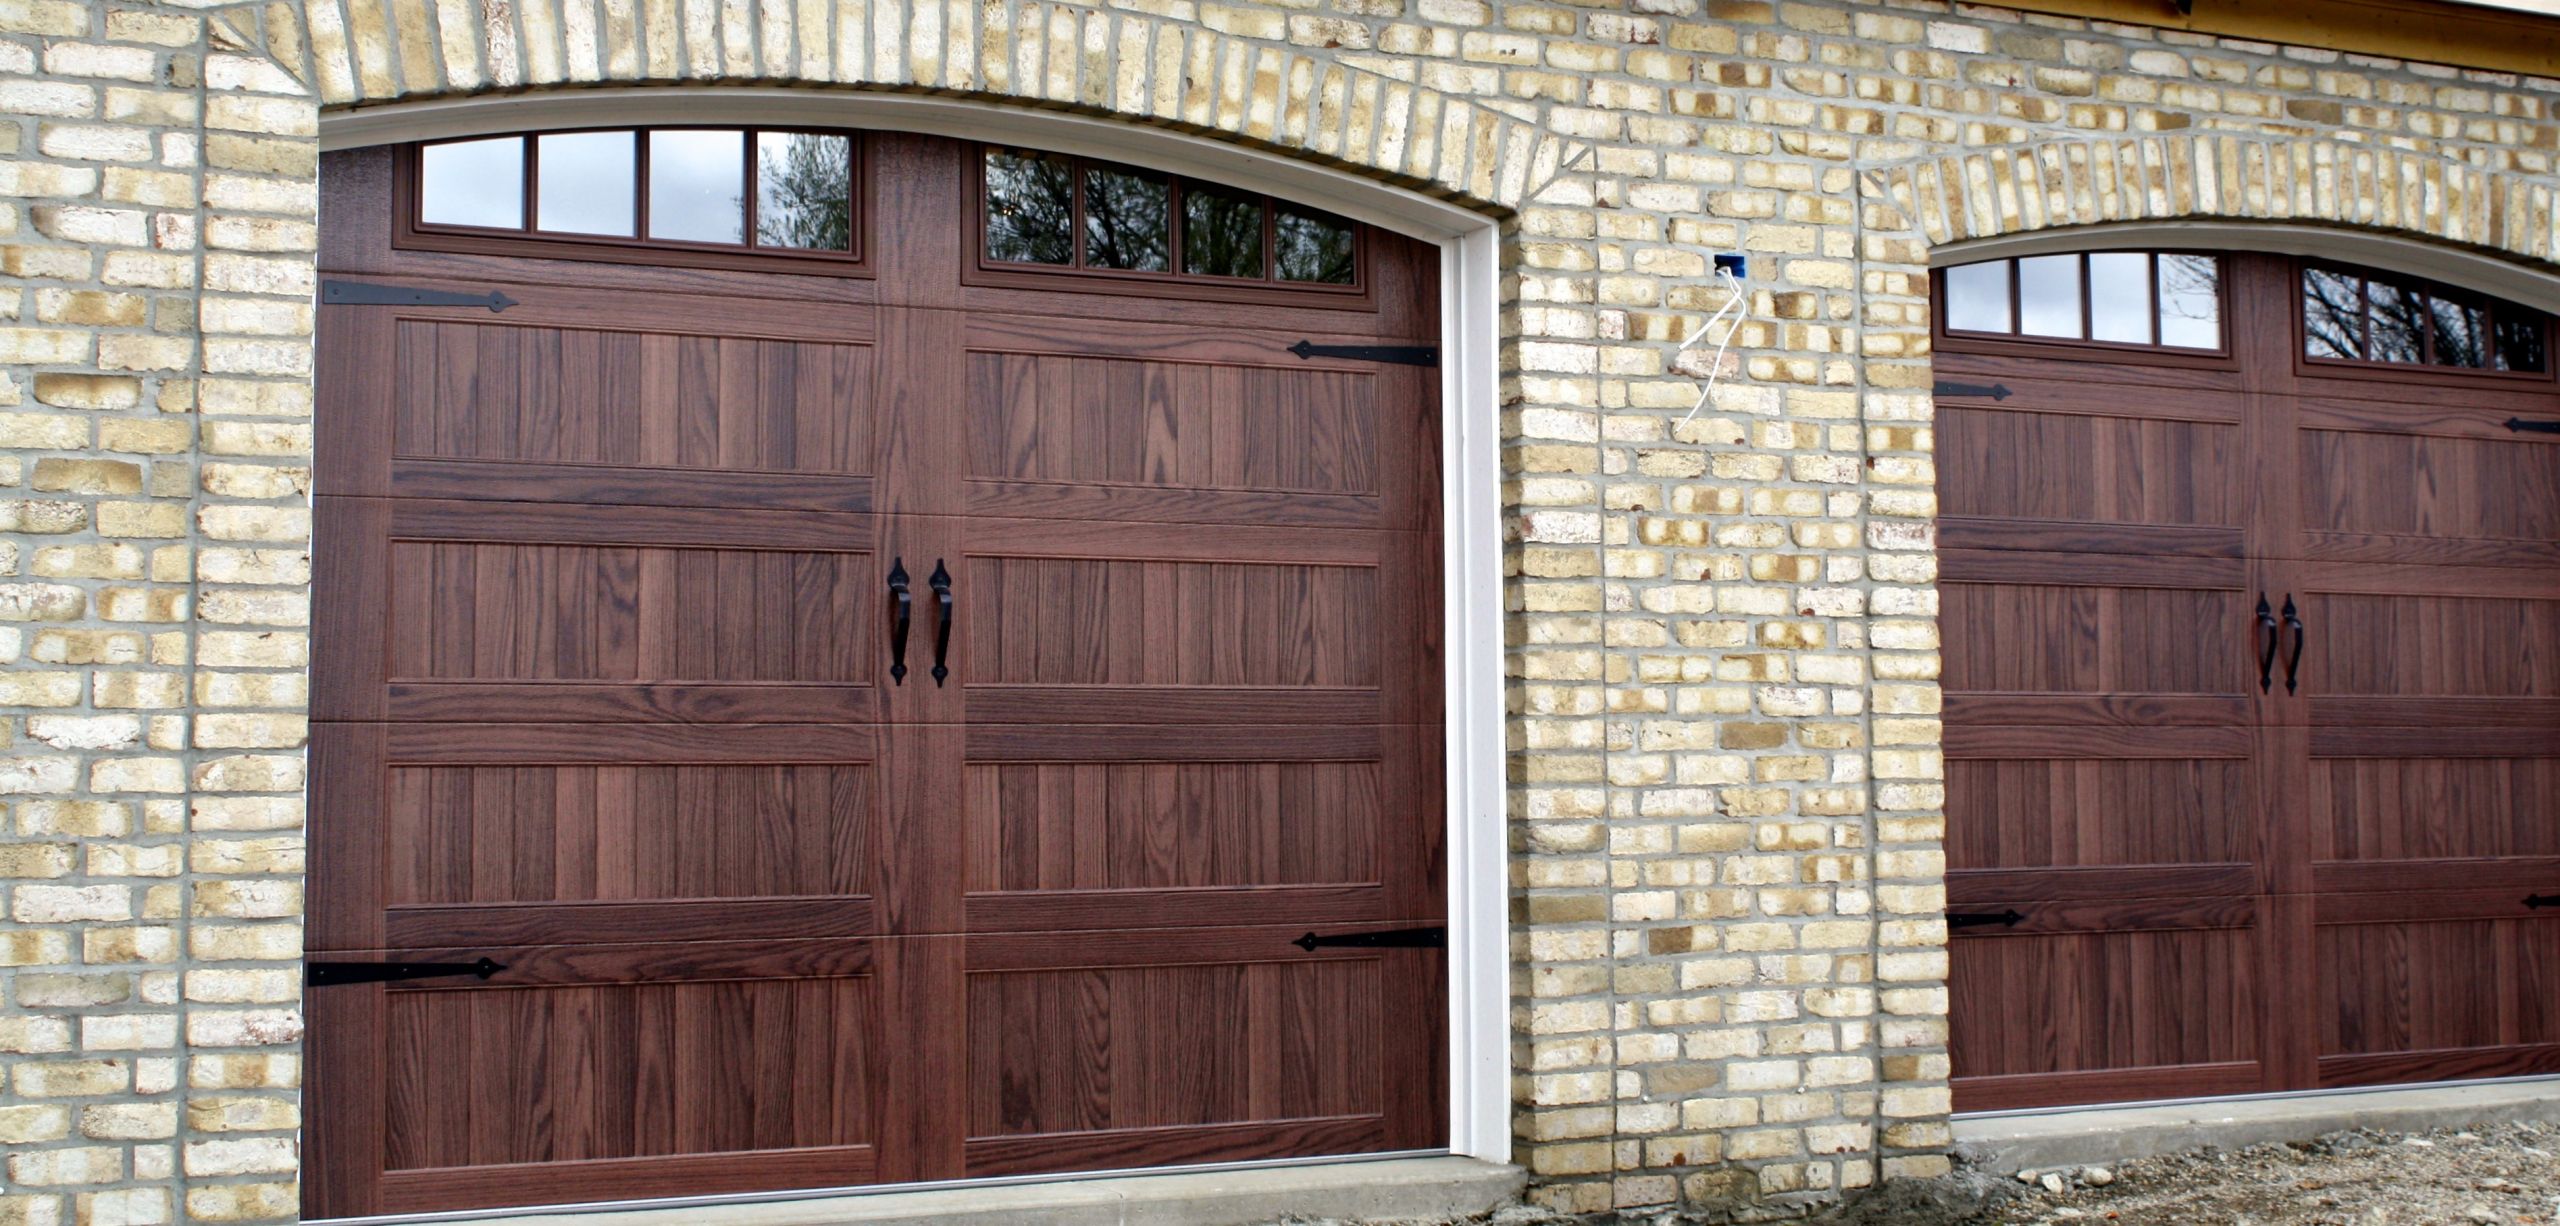 Garage Door Panels
 faux wood arched overhead garage doors in mahogany and